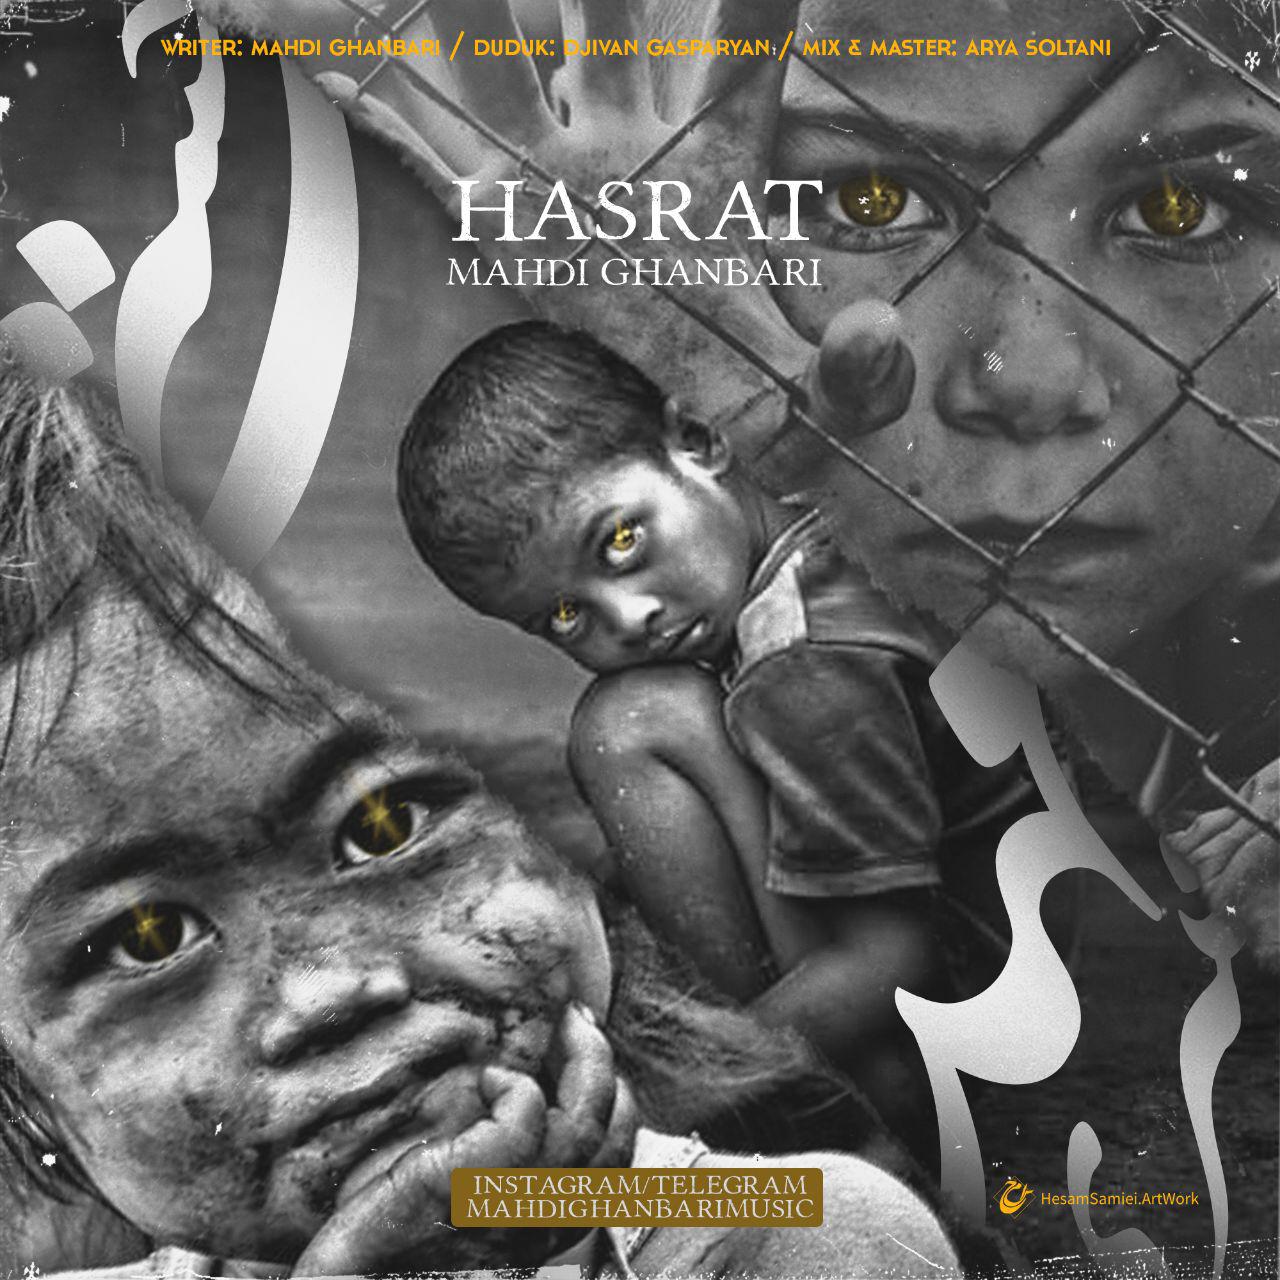  دانلود آهنگ جدید مهدی قنبری - حسرت | Download New Music By Mahdi Ghanbari - Hasrat